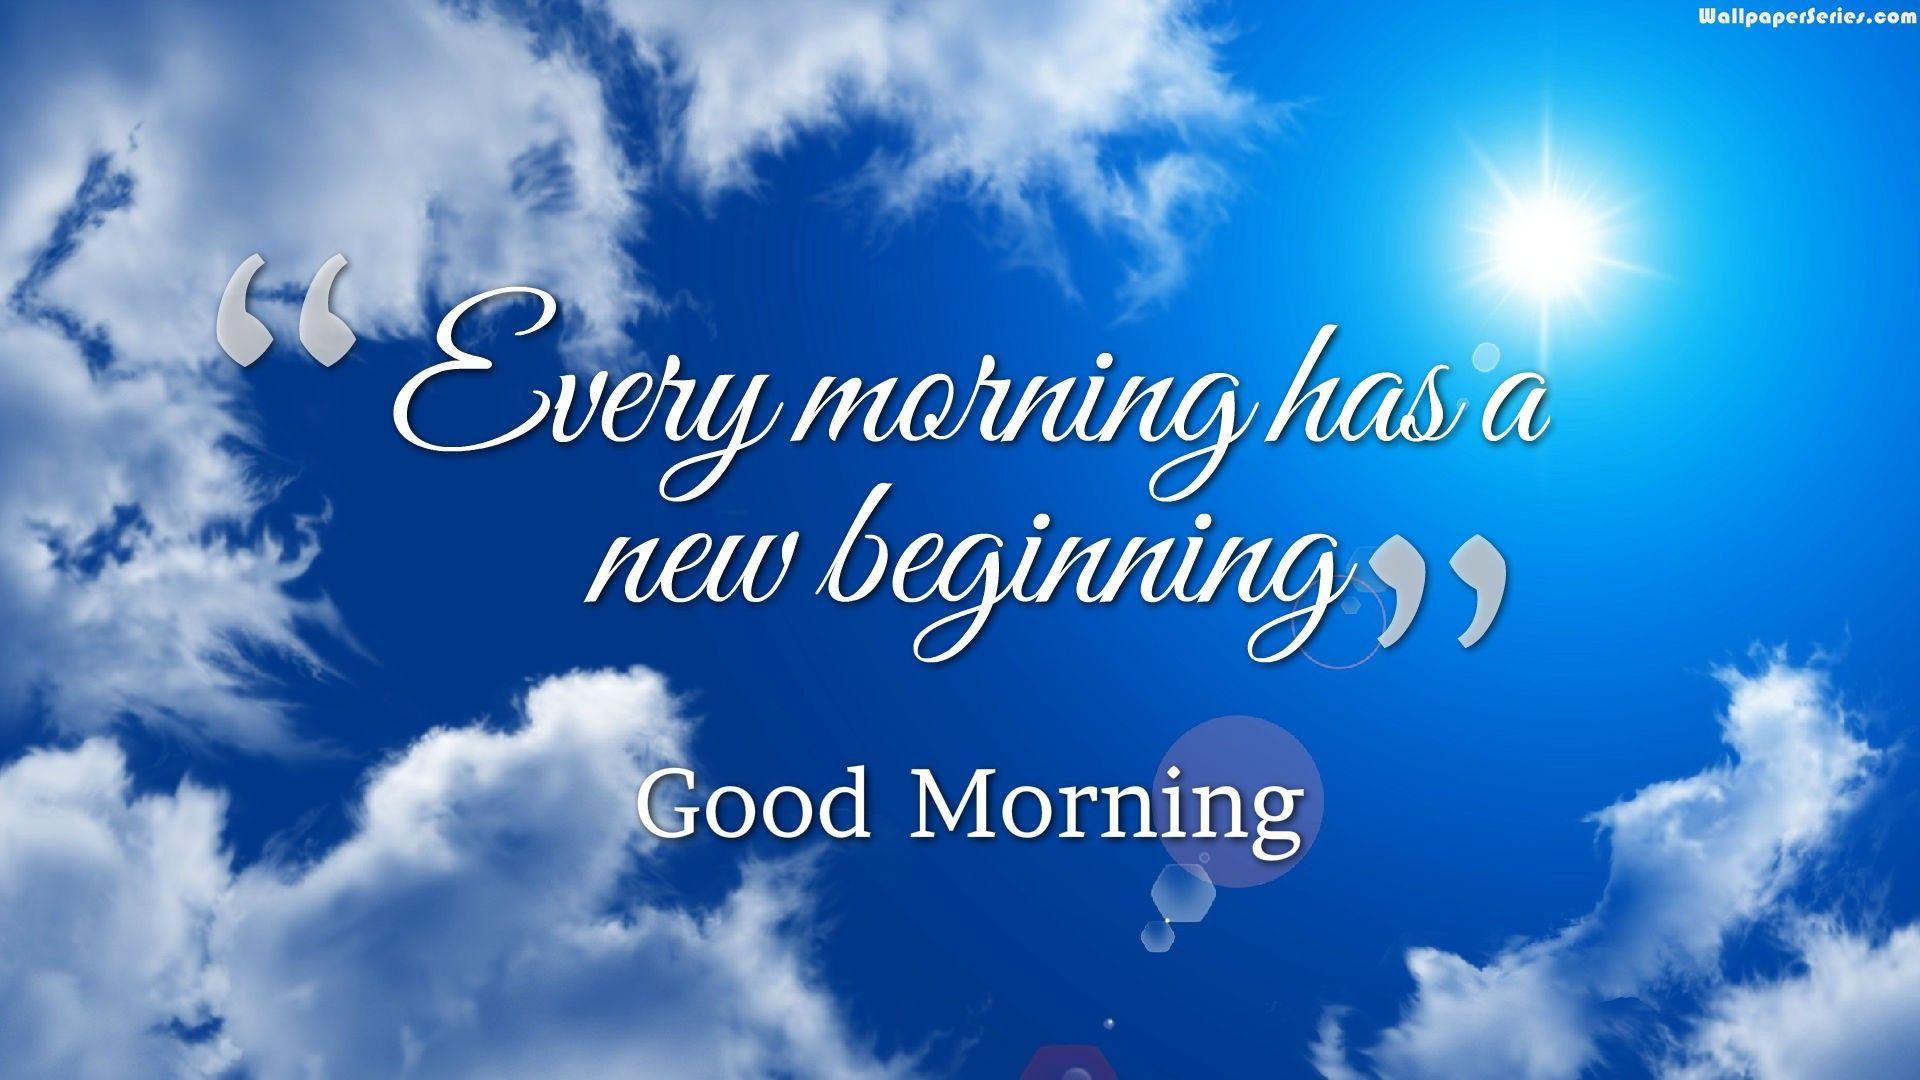 New Beginning Good Morning Quotes Wallpaper 05823